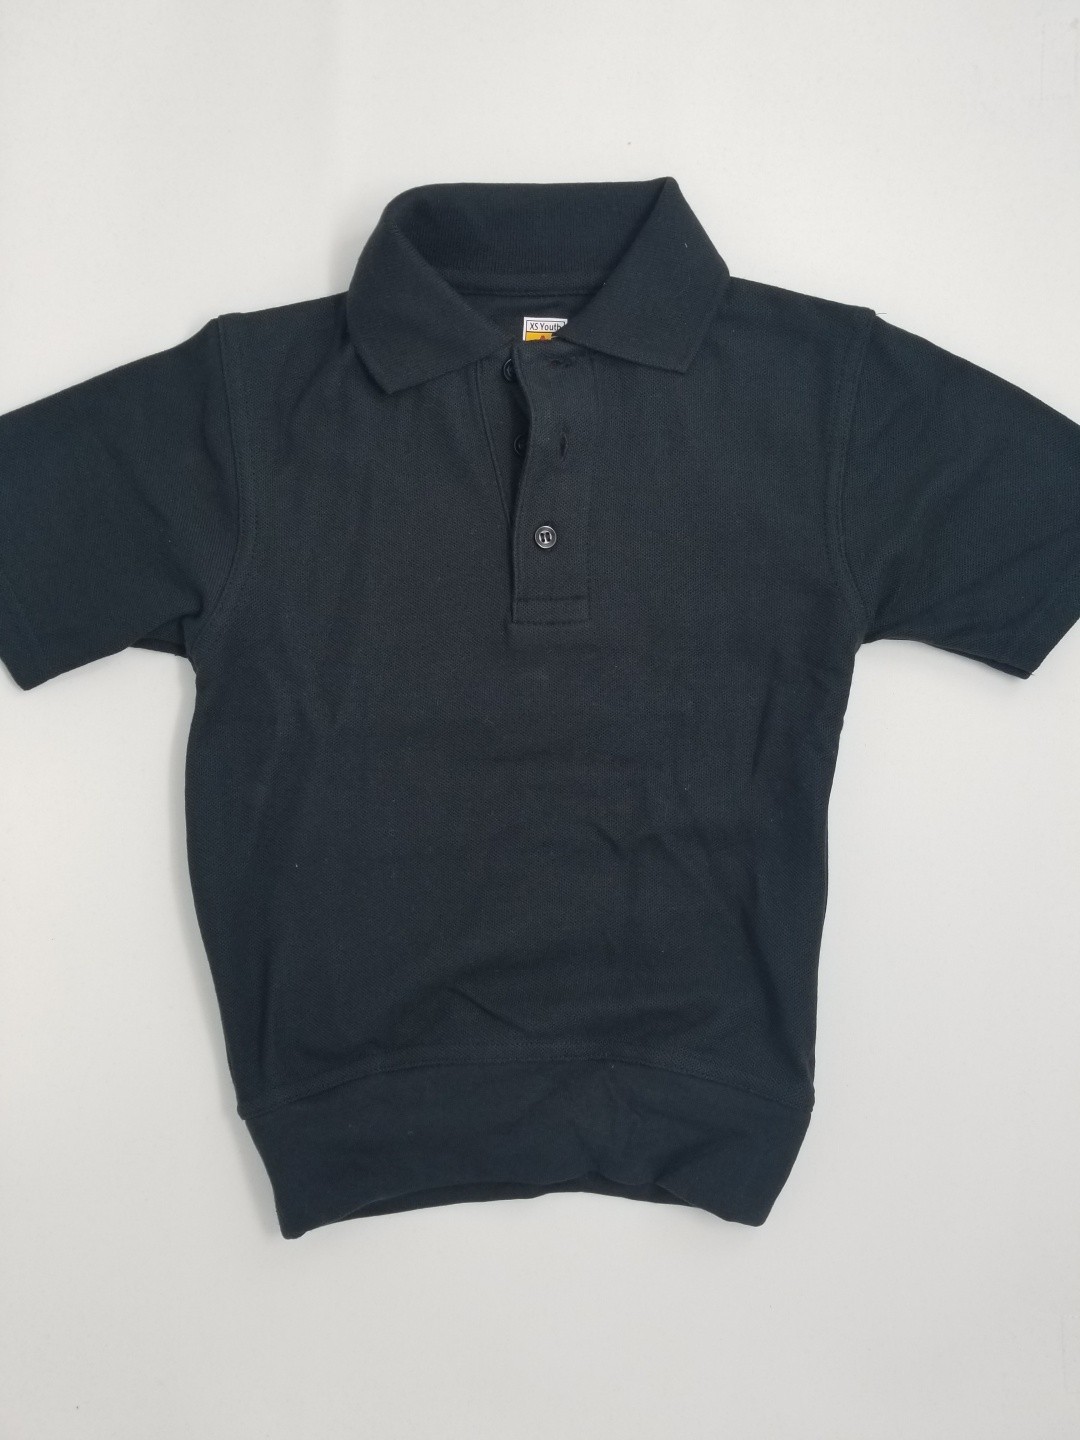 Banded Bottom "No Tuck" Knit Shirt- Smooth/Jersey- Short Sleeve-Navy